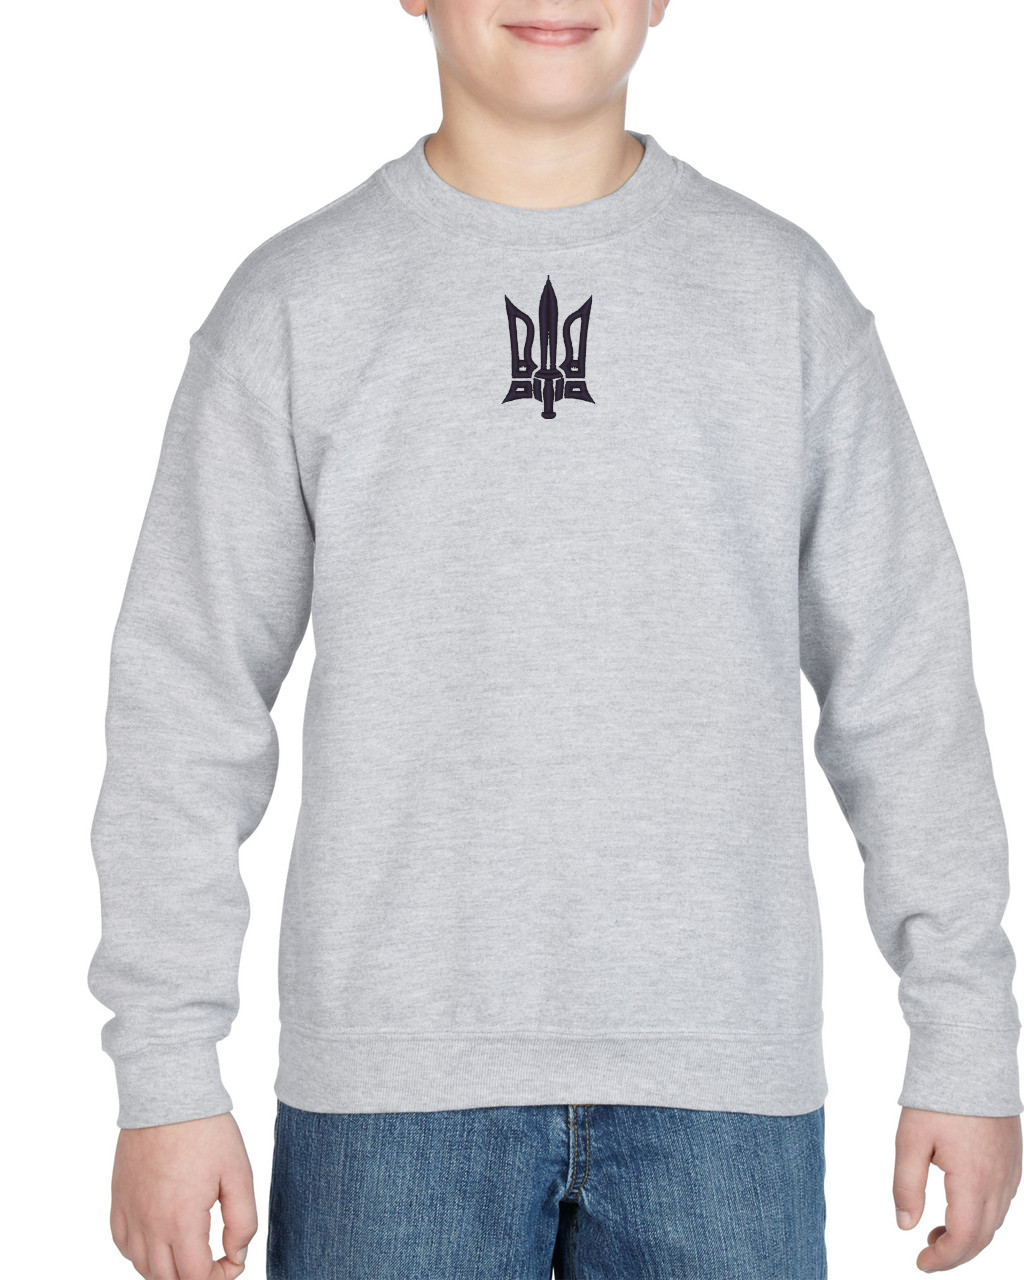 Kids' embroidered sweatshirt "Tryzub"